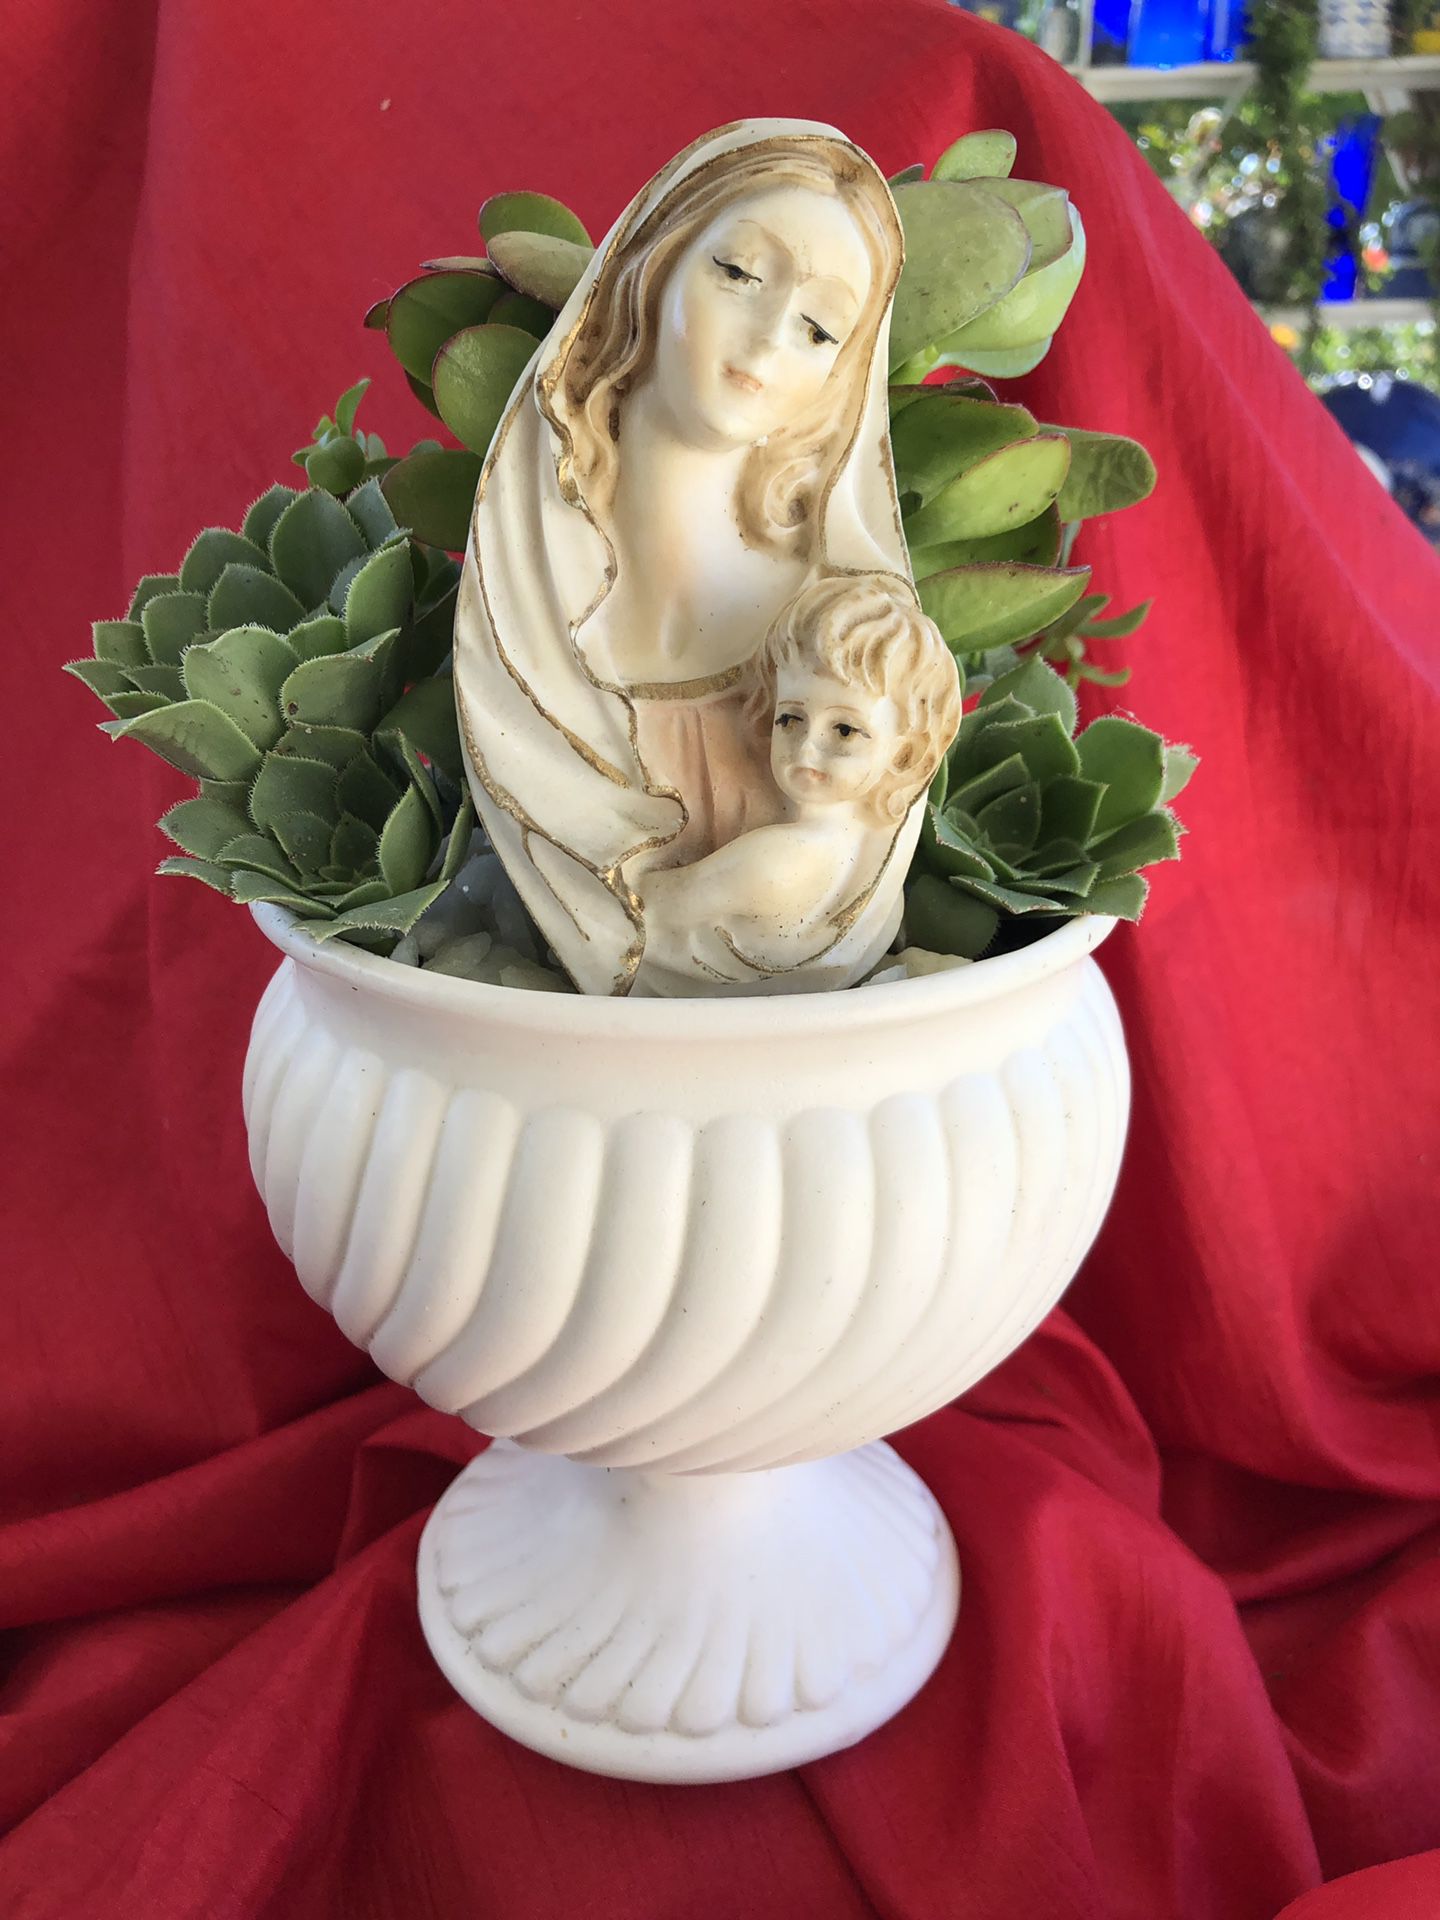 Succulent plants in Madonna and Child arrangement